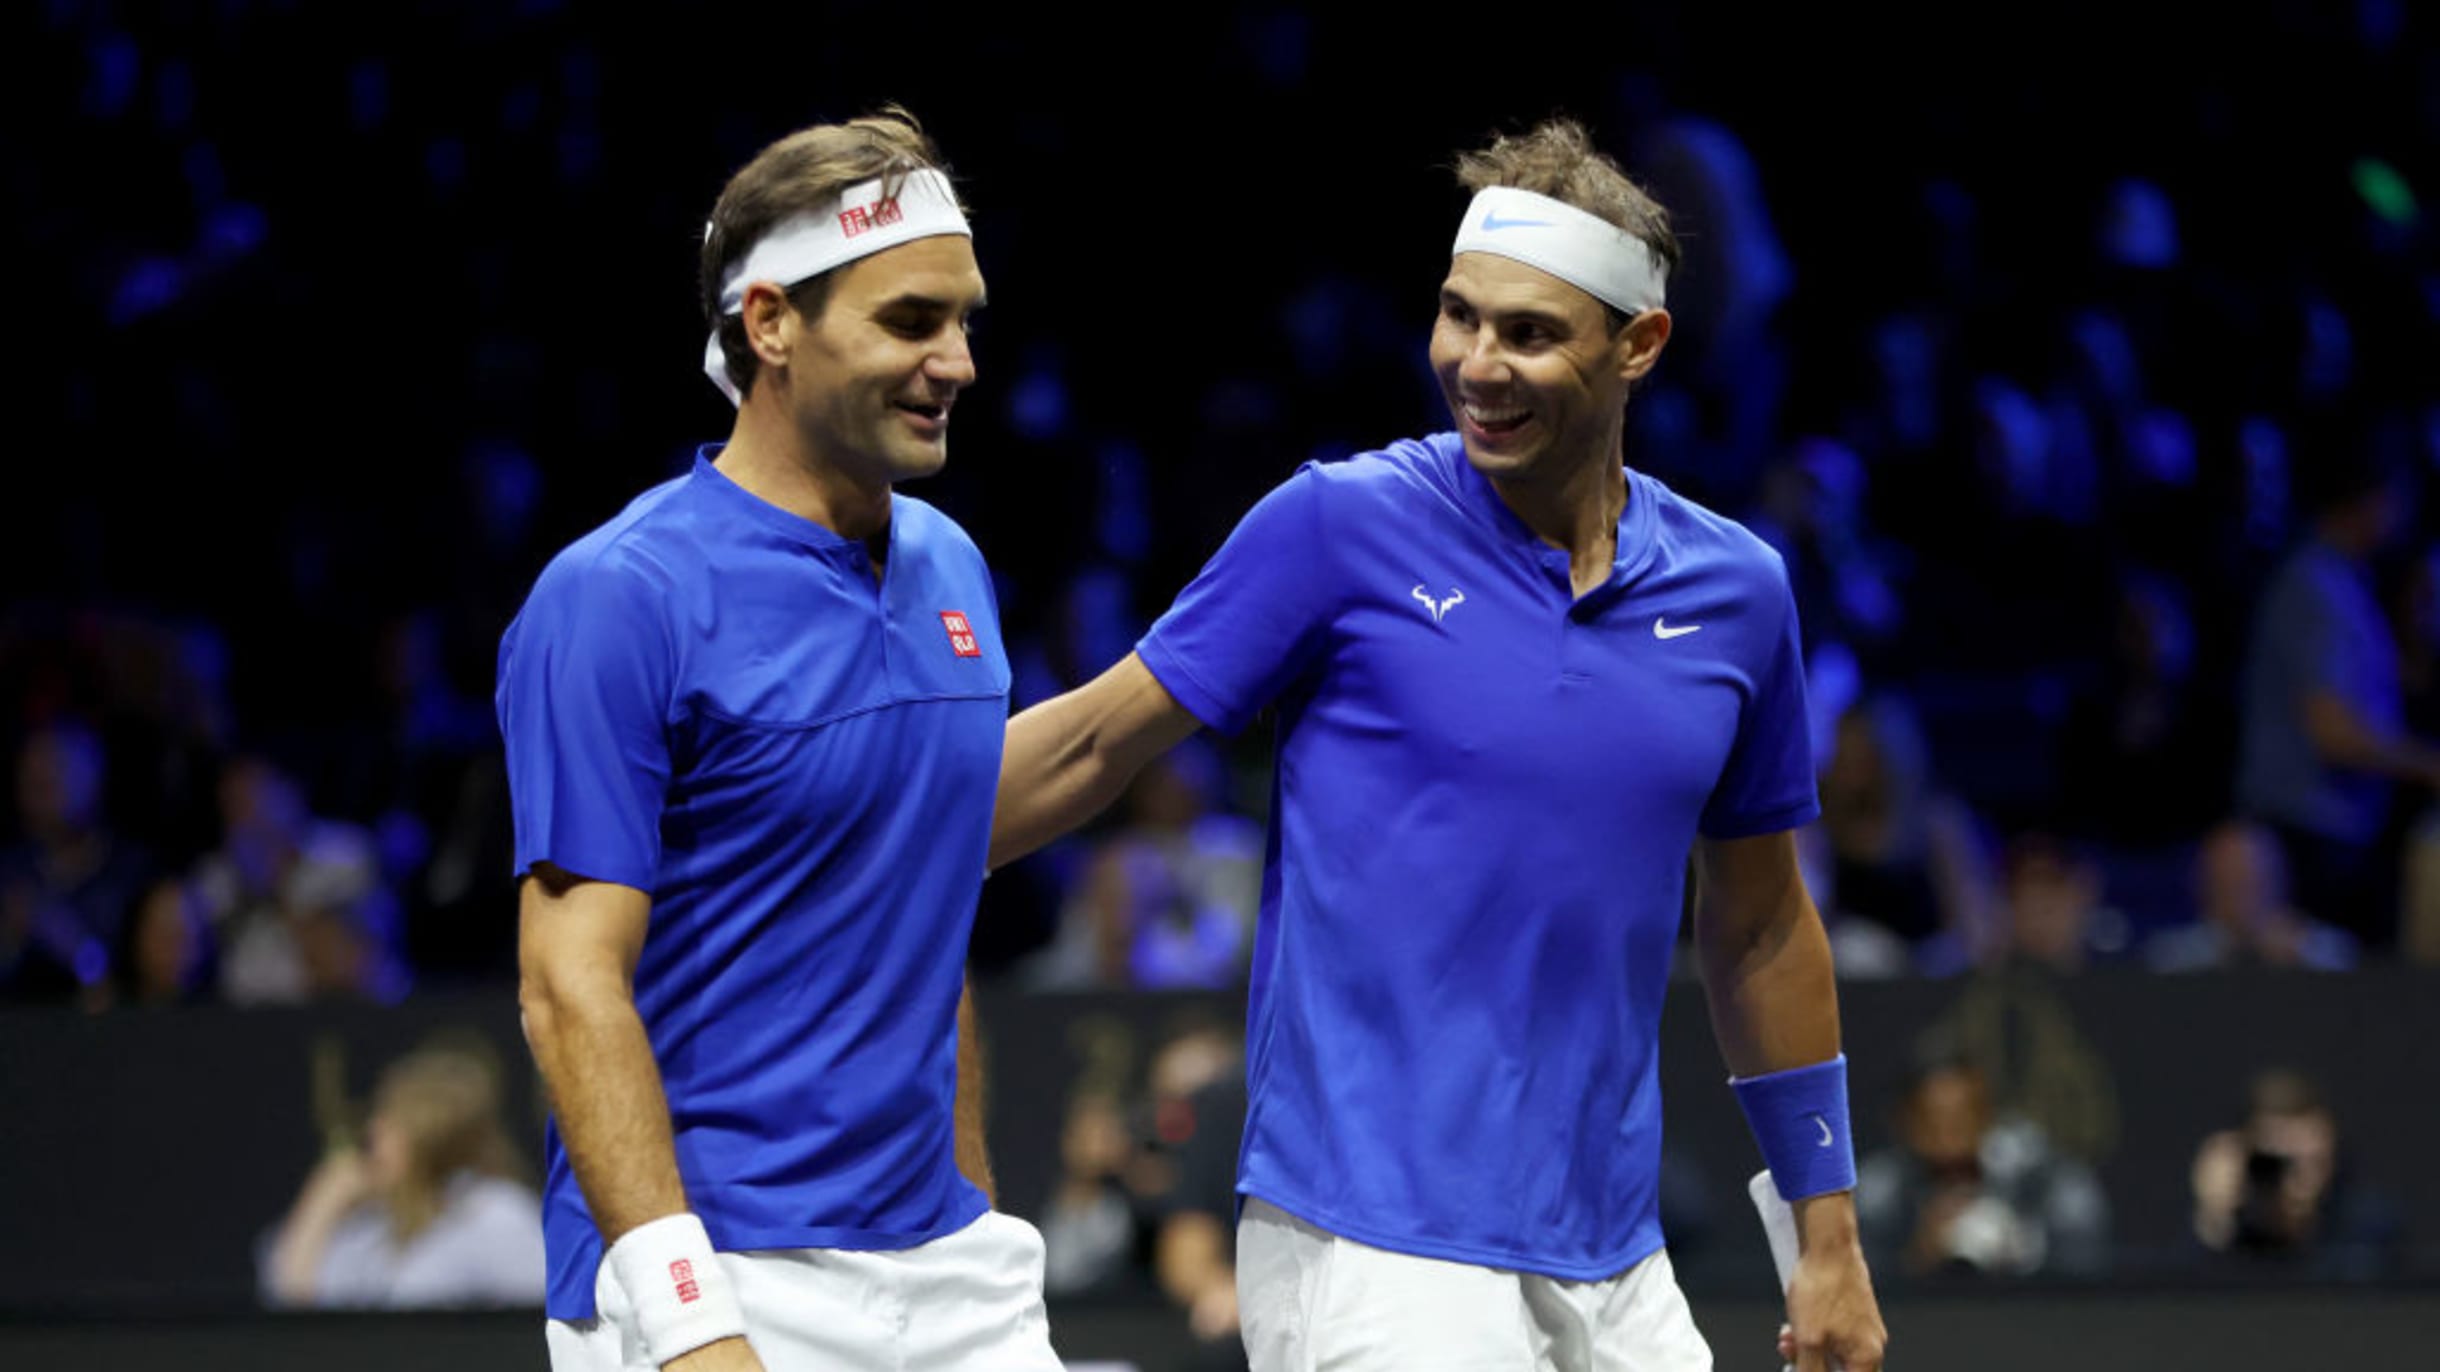 Who has won most men's tennis Grand Slams? Roger Federer, Rafael